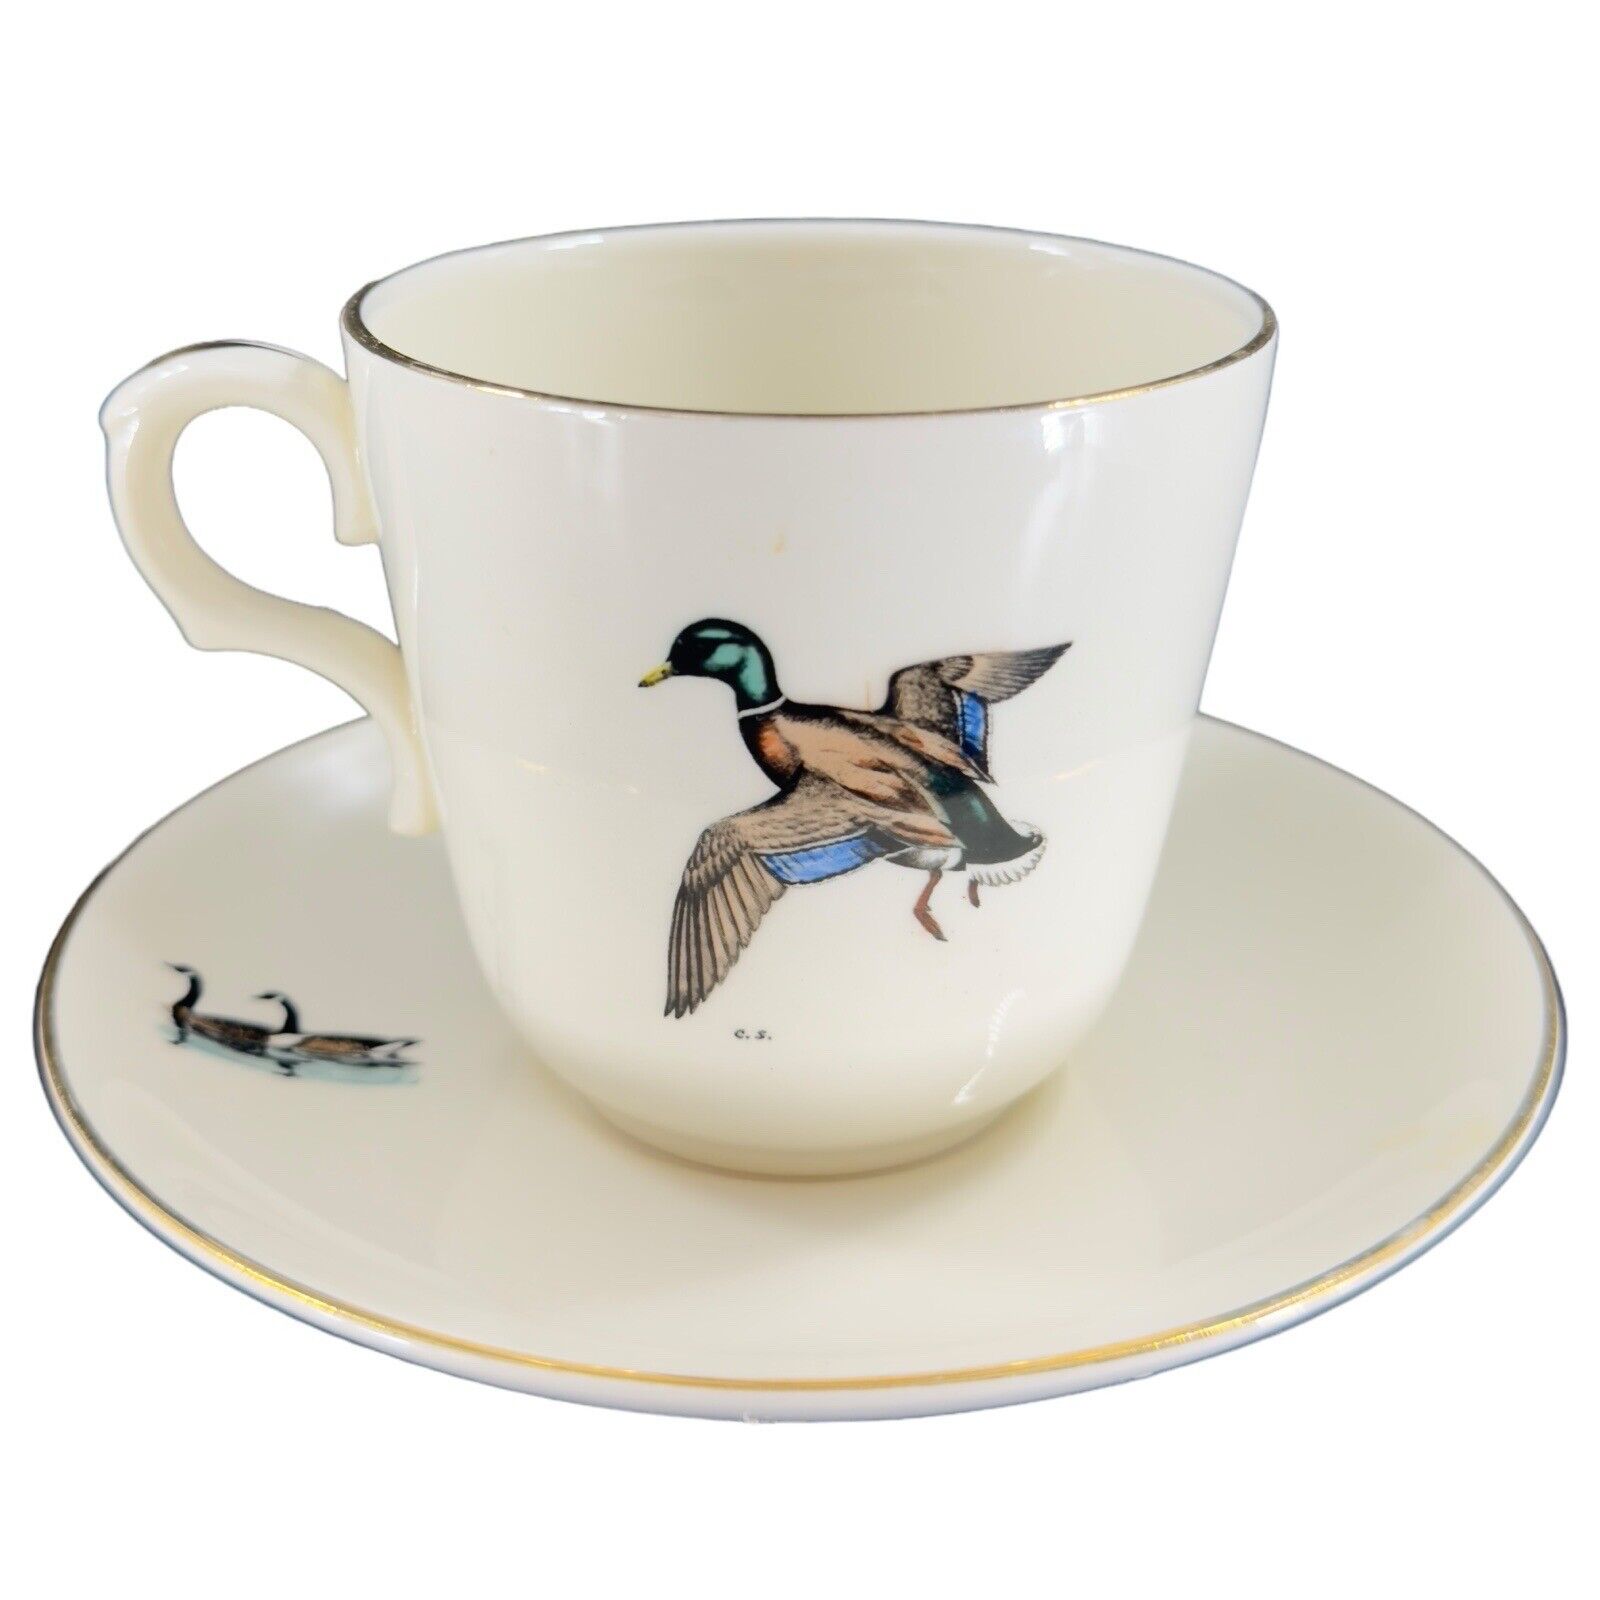 VTG Delano Studios Hand Colored Duck Bird Saucer And Teacup Cup Porcelain Set